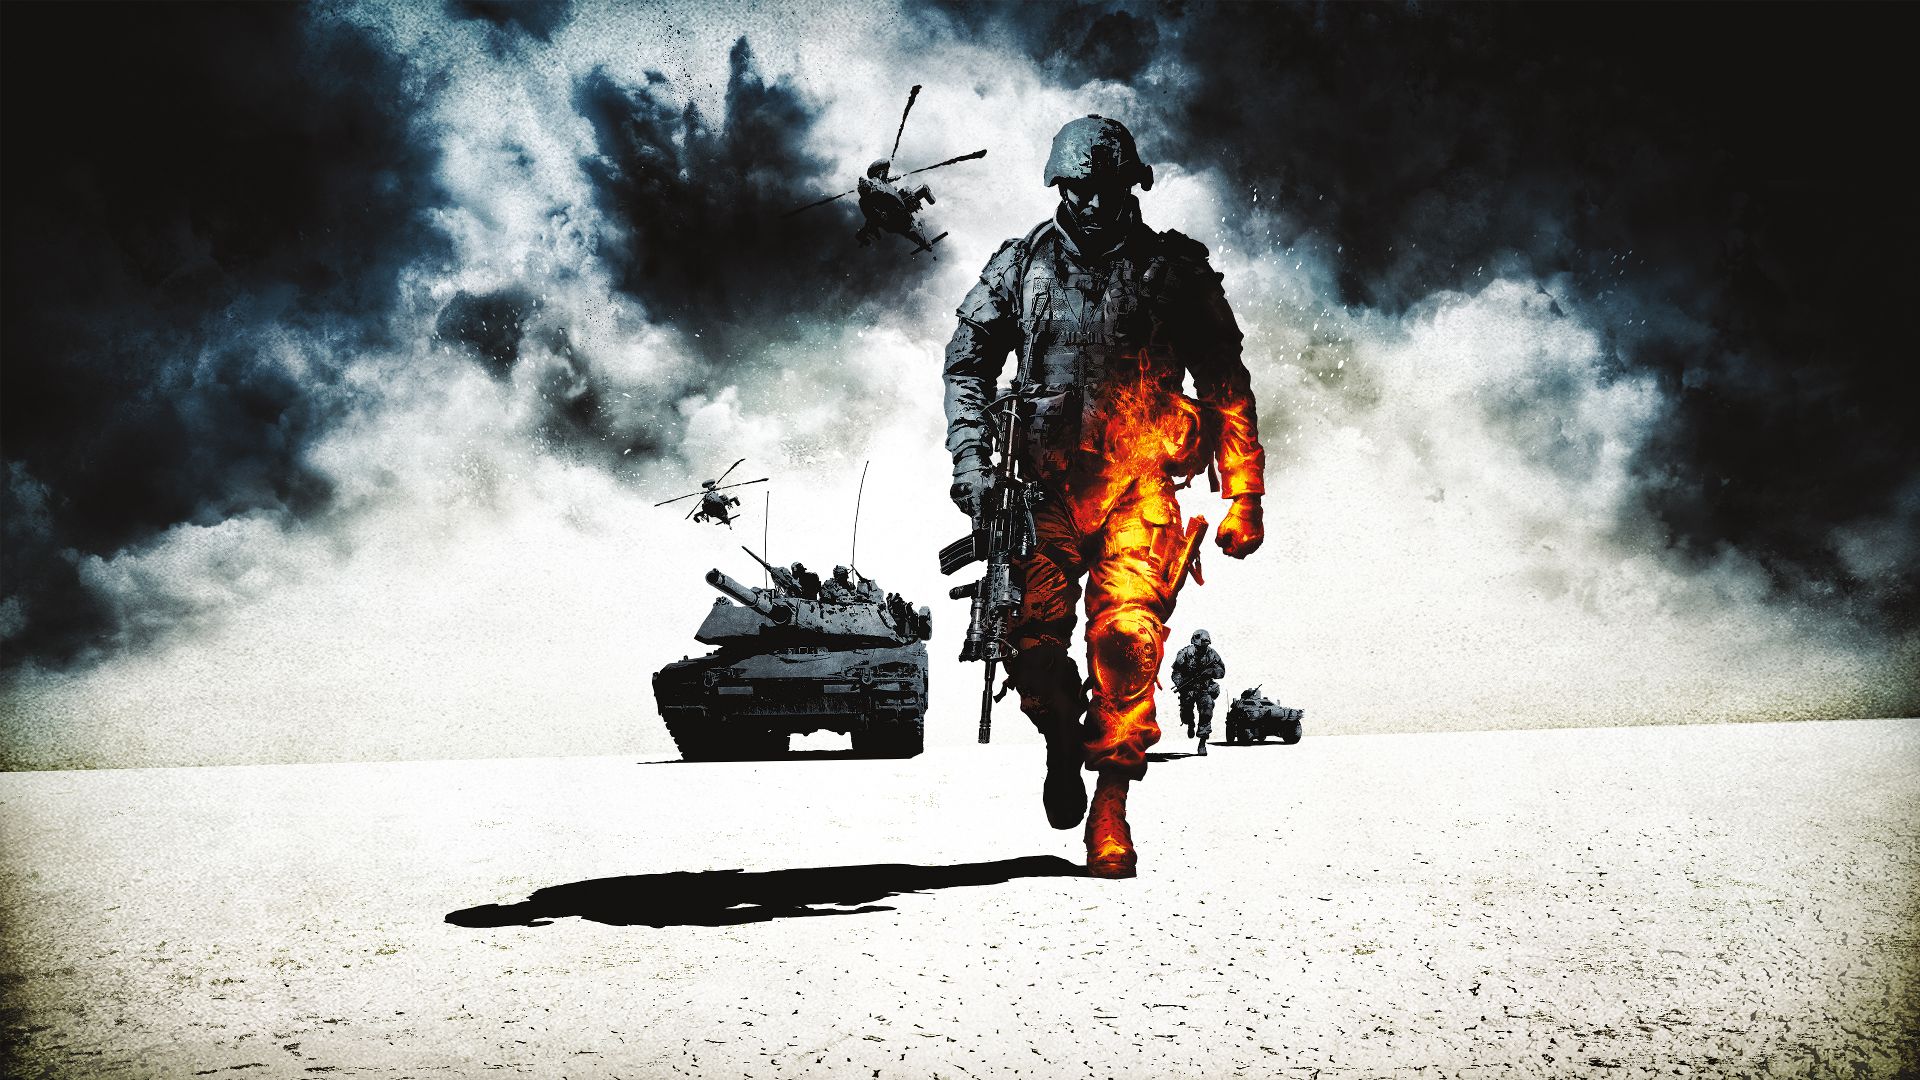 Battlefield Bad Company 1 Wallpaper